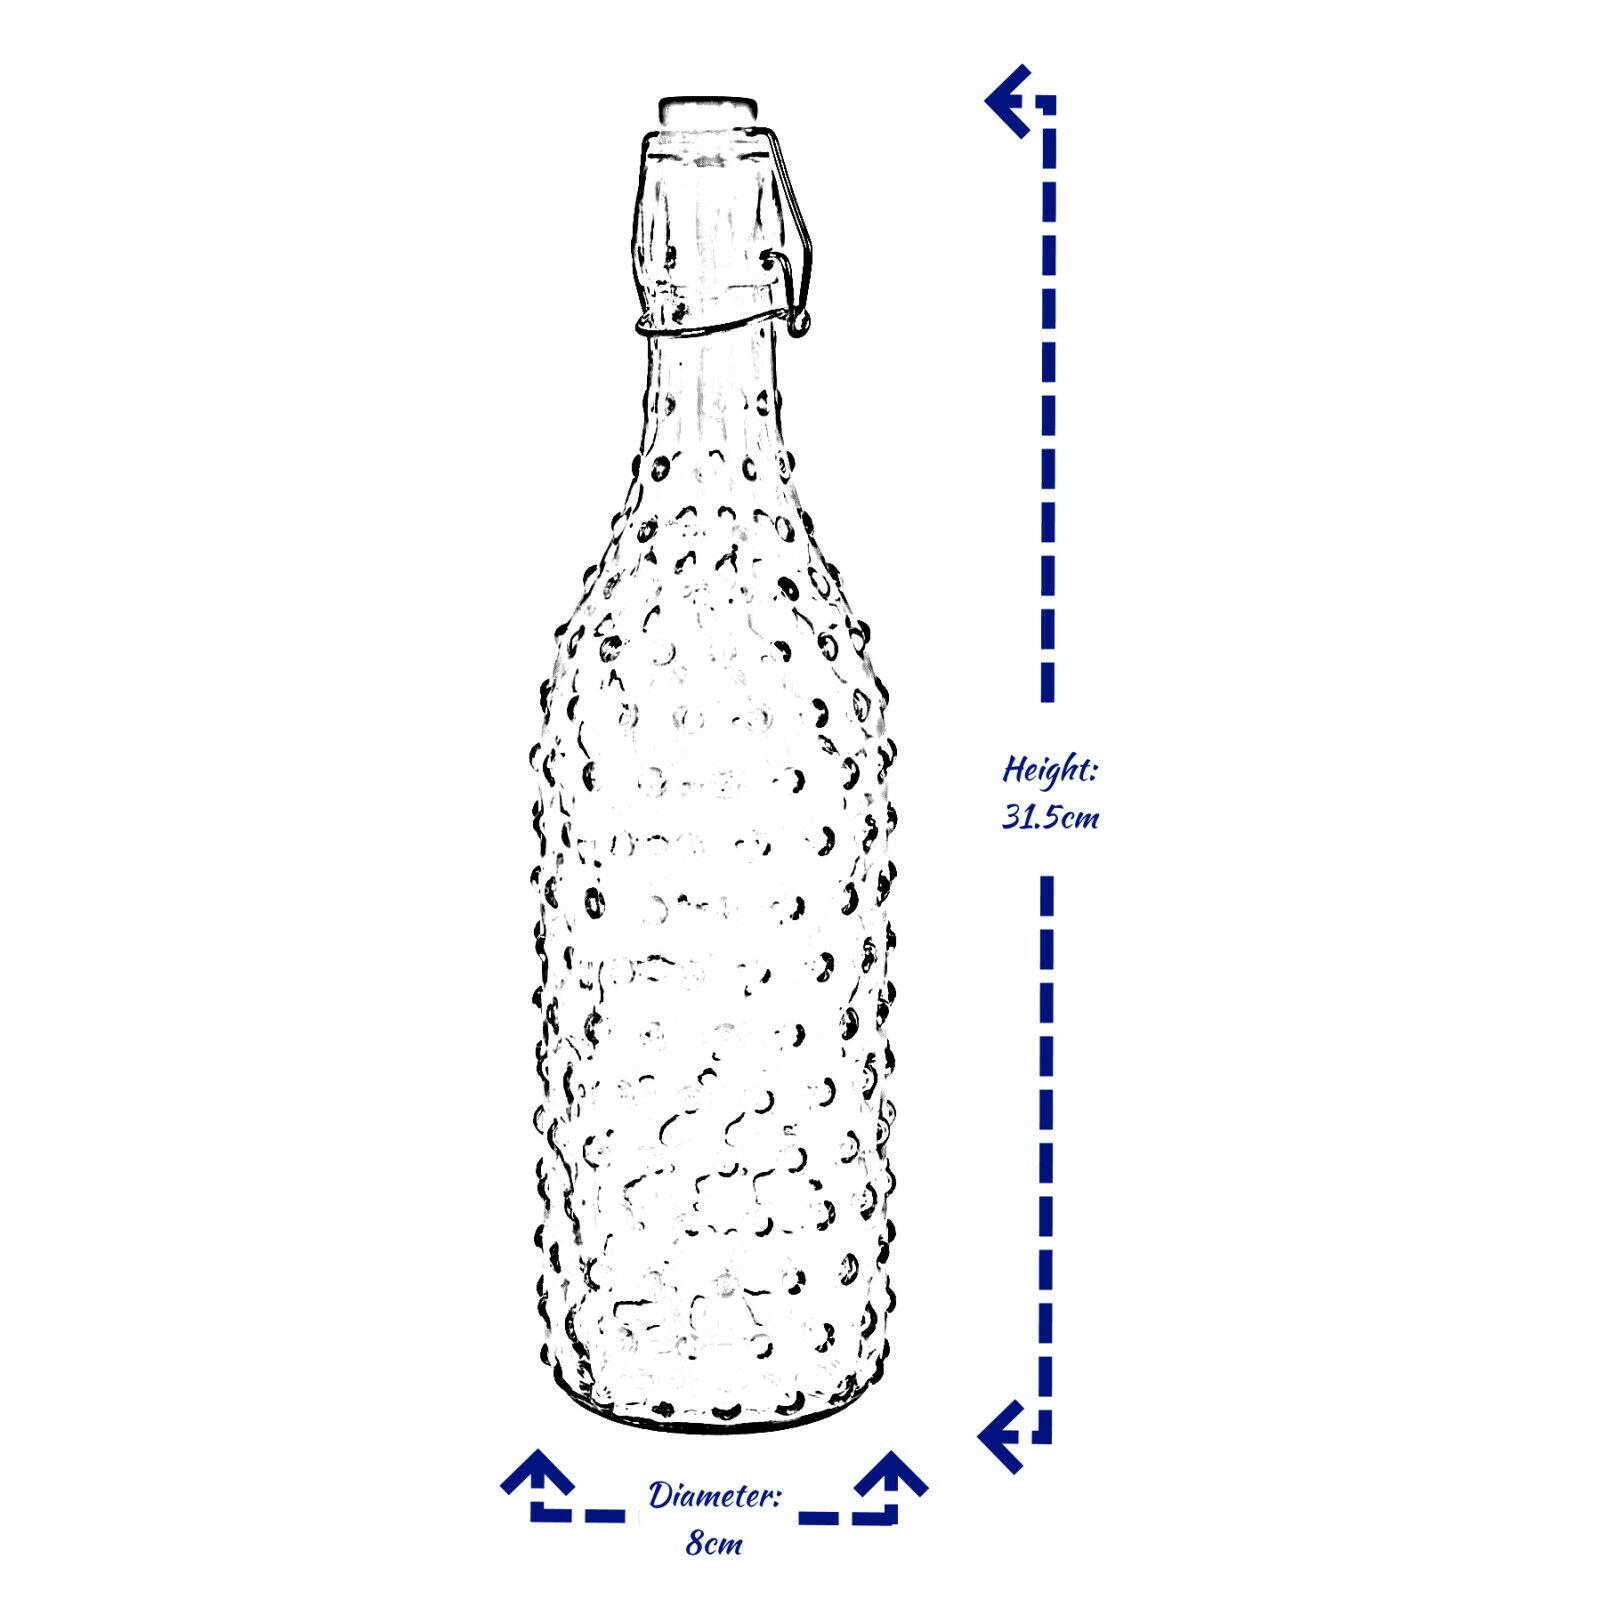 Glass Beverage Water Bottle 1 Litre Vintage Airtight Preserve Fridge